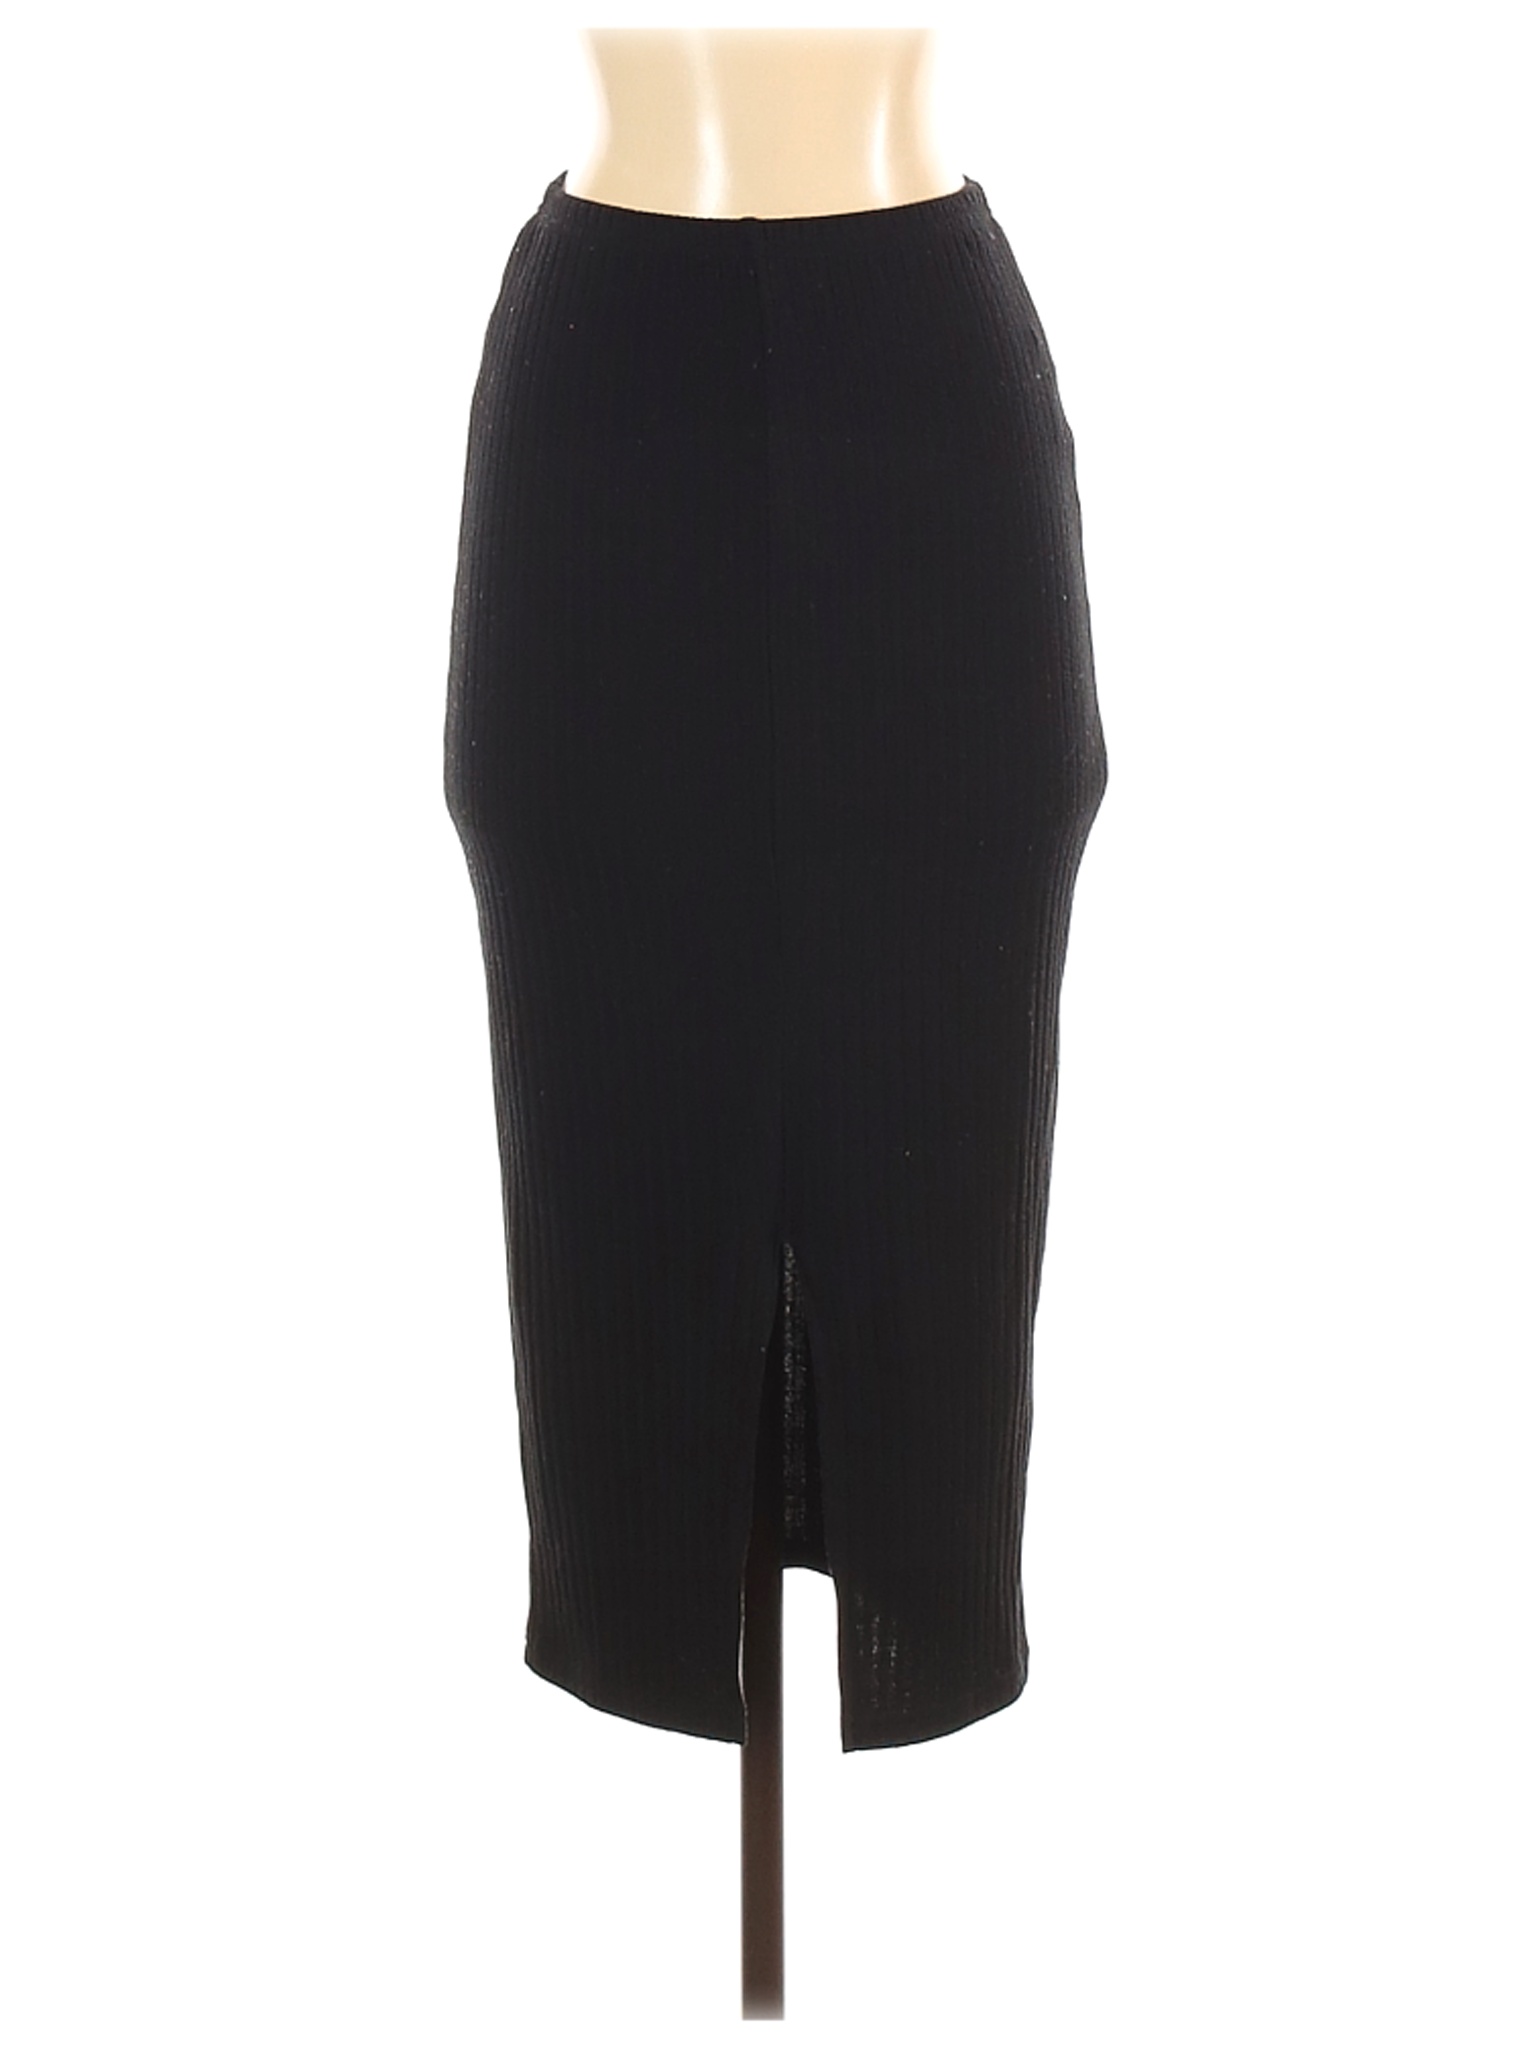 Shein Women Black Casual Skirt S | eBay